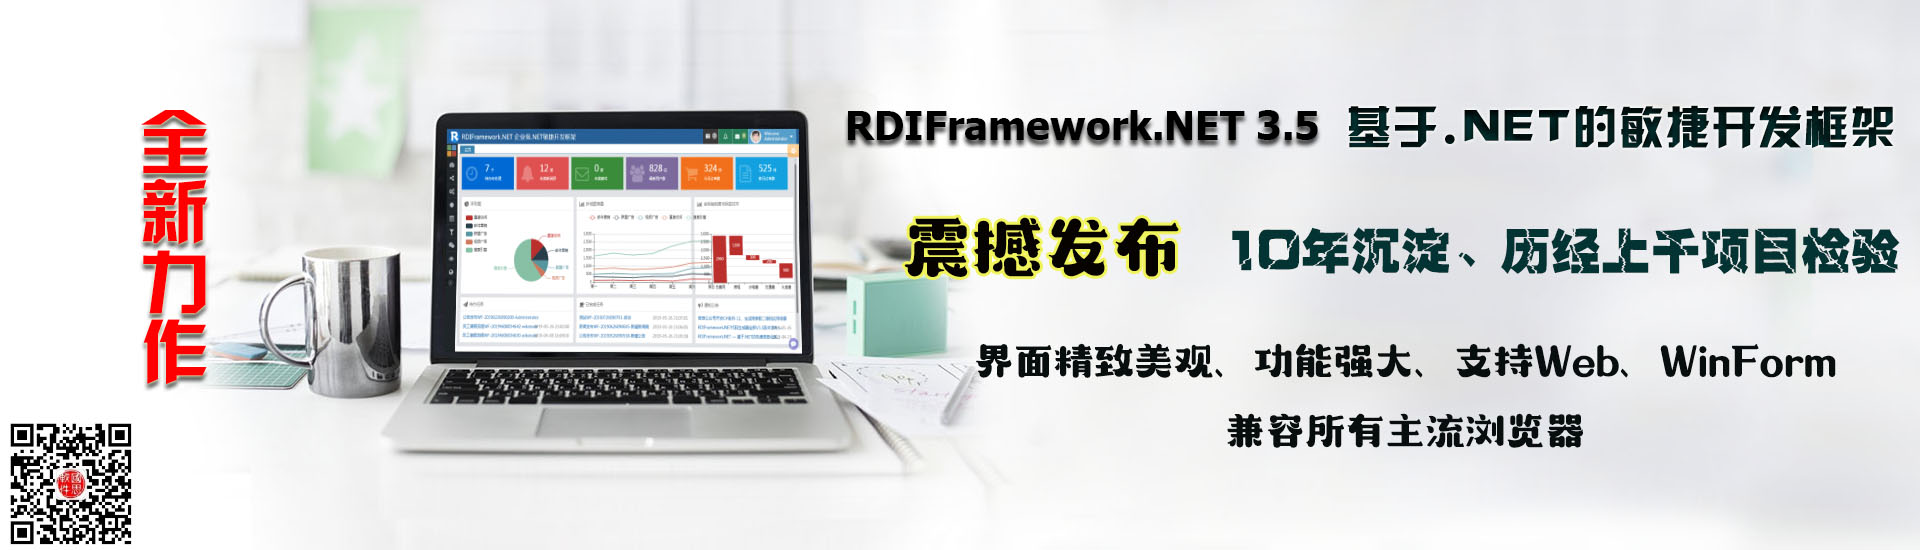 RDIFramework.NET ━ .NET Framework agile new release - .NET development framework is best to use 100% of the authorized source